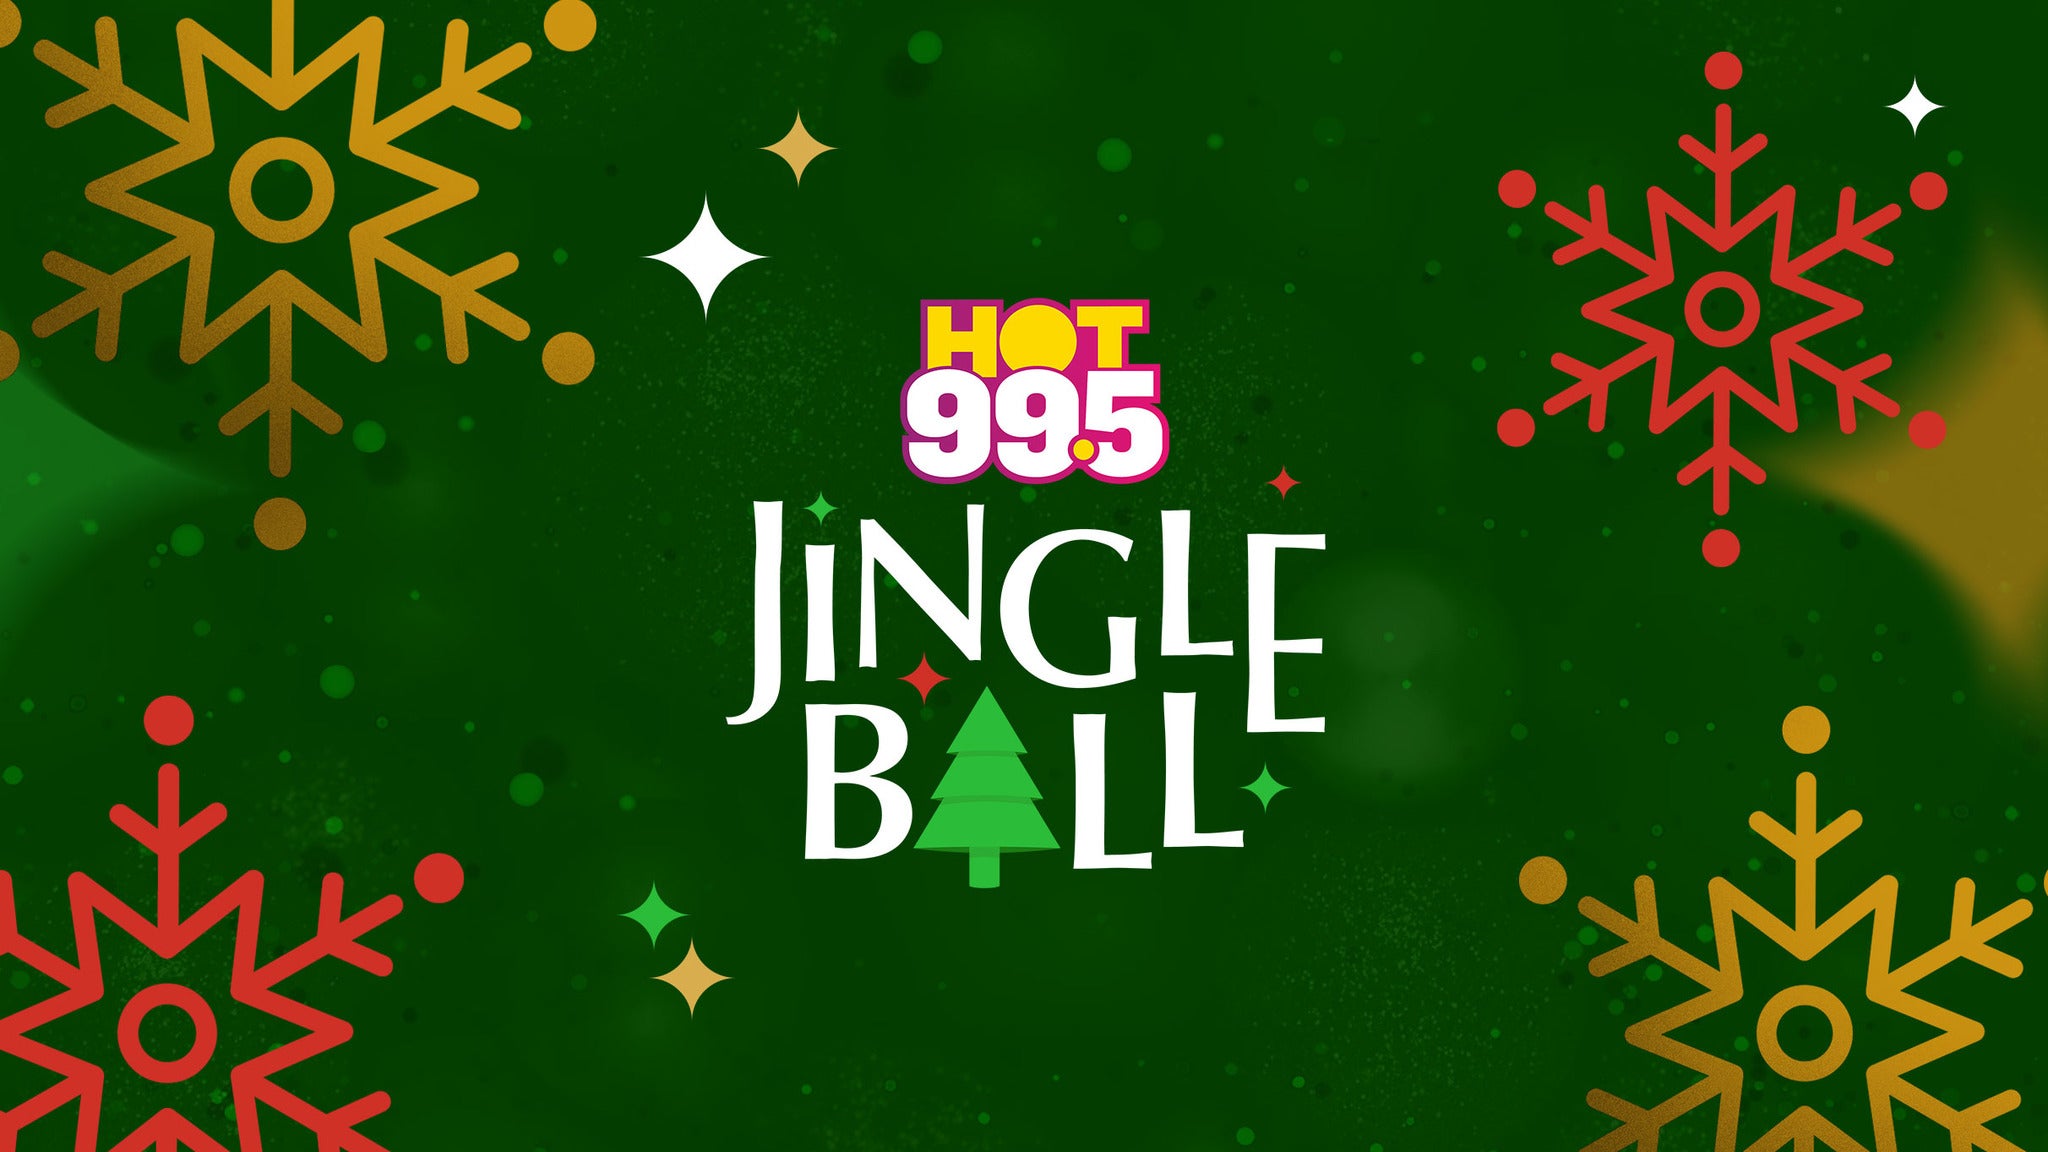 Hot 99.5's Jingle Ball in Washington promo photo for Capital One Cardholder presale offer code